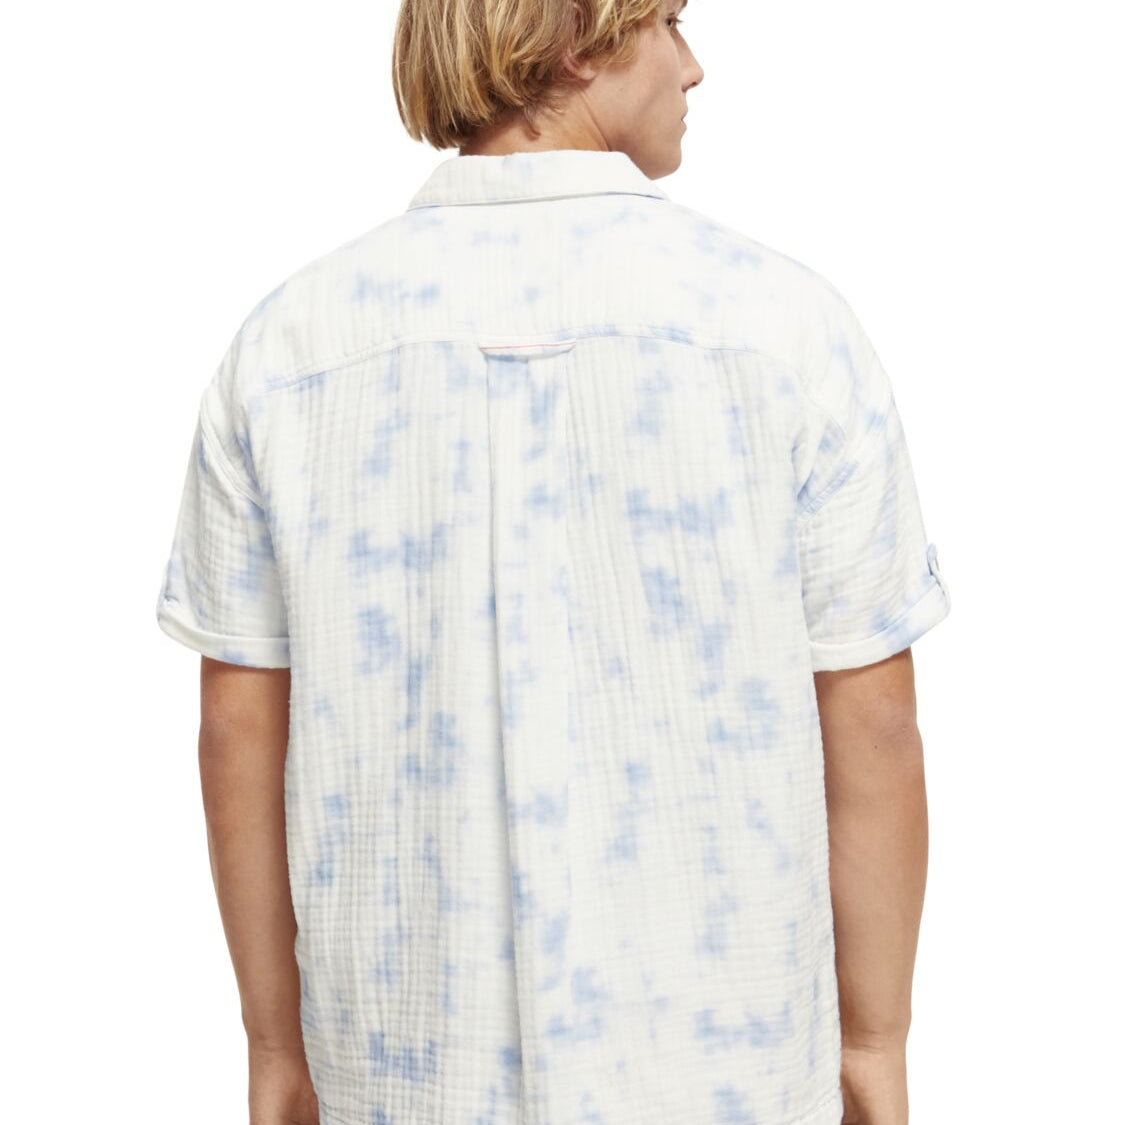 Scotch & Soda Short Sleeve Bonded Printed Shirt - Off White - 3 - Tops - Shirts (Short Sleeve)